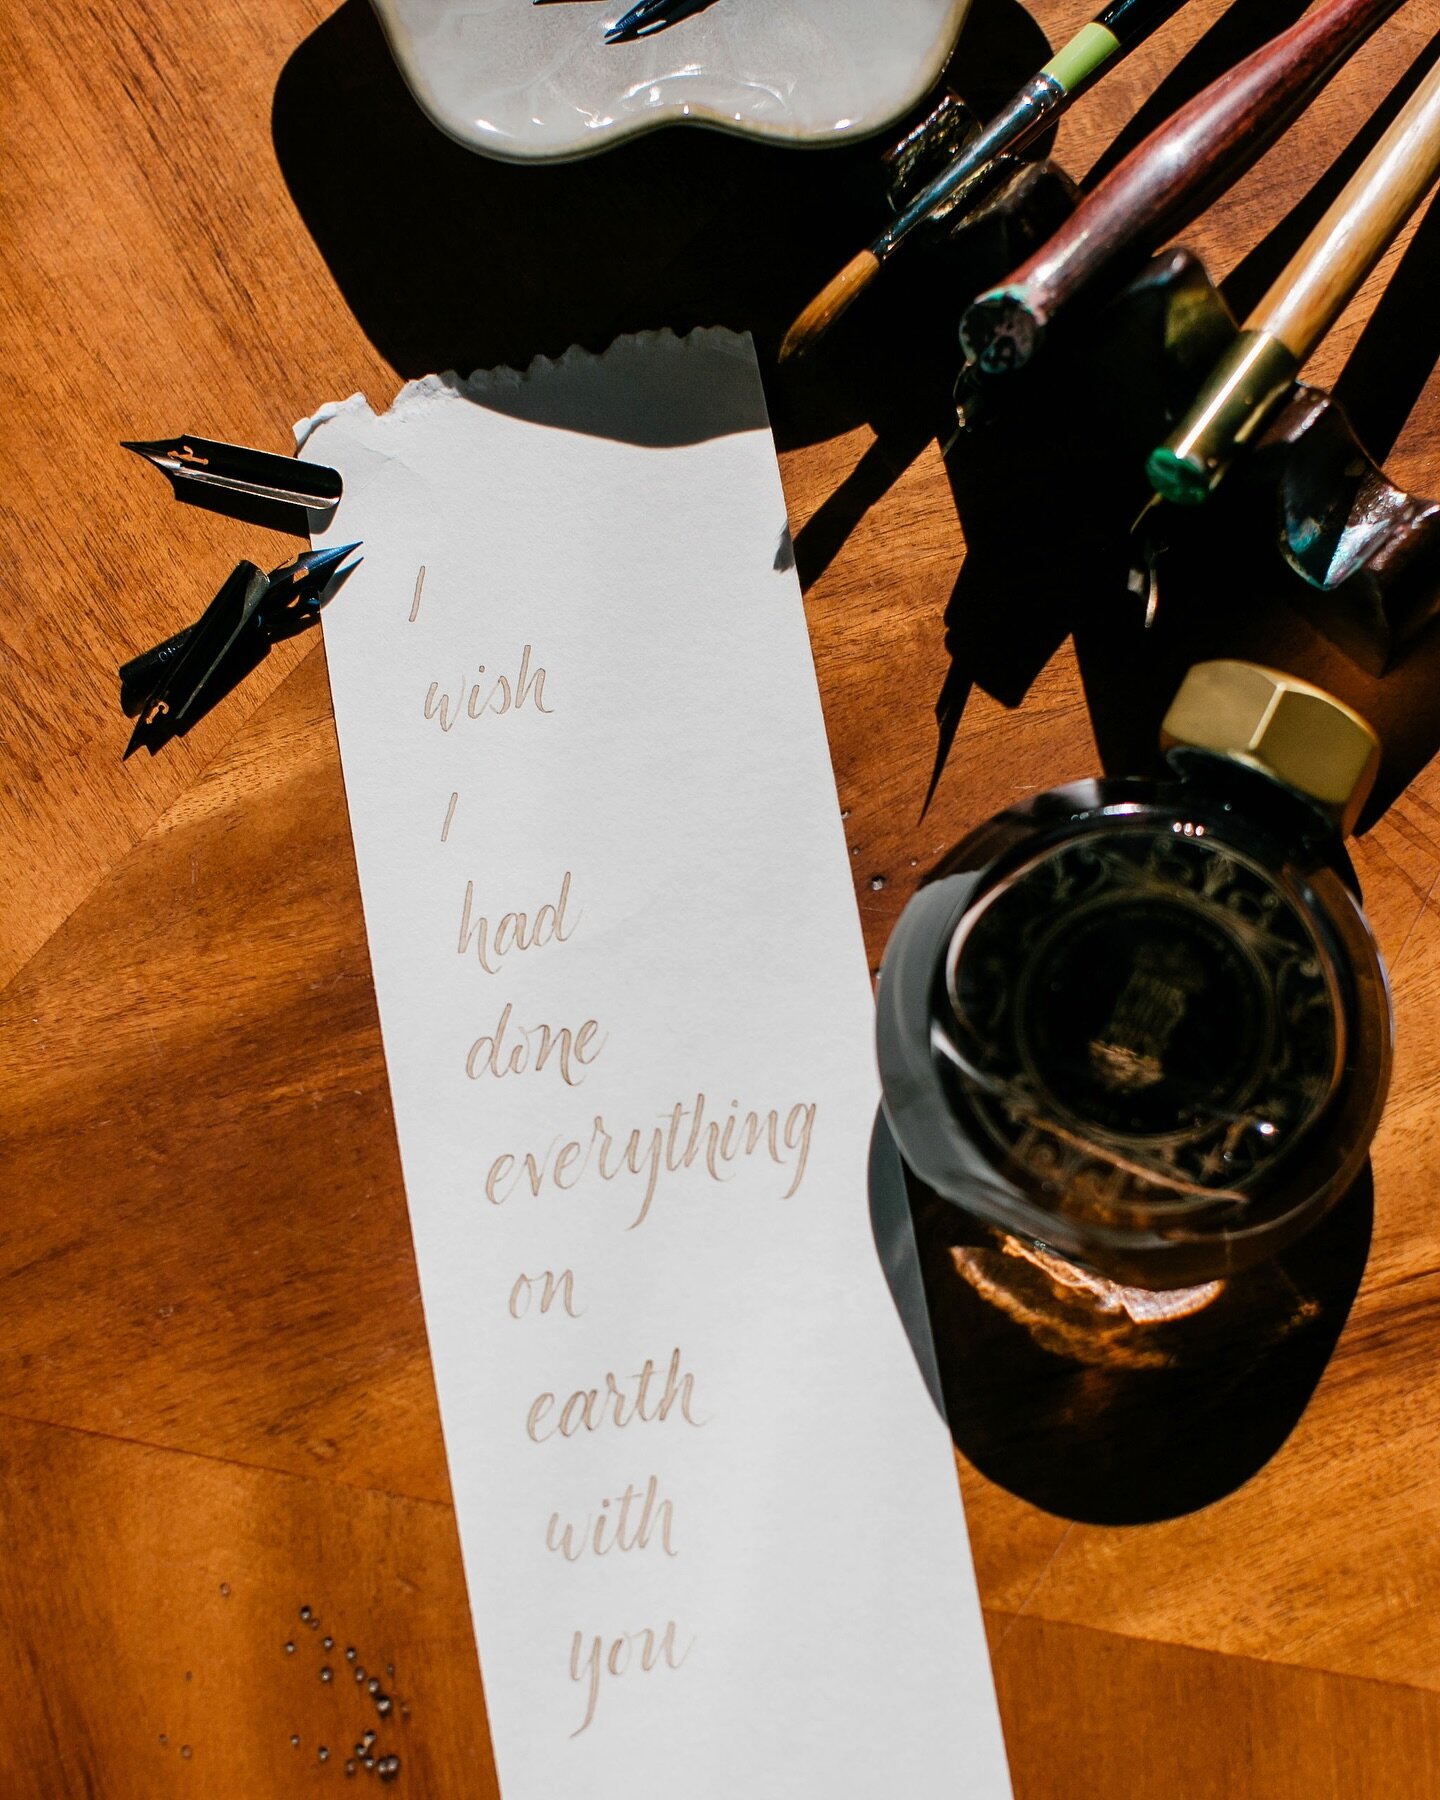 &ldquo;I wish I had done everything on earth with you.&rdquo; ~F. Scott Fitzgerald 
💕
💕
📸 @jencreedcreative 
💕
#gertiescalligraphy #fscottfitzgerald #calligraphyquotes #moderncalligraphy #weddingcalligrapher